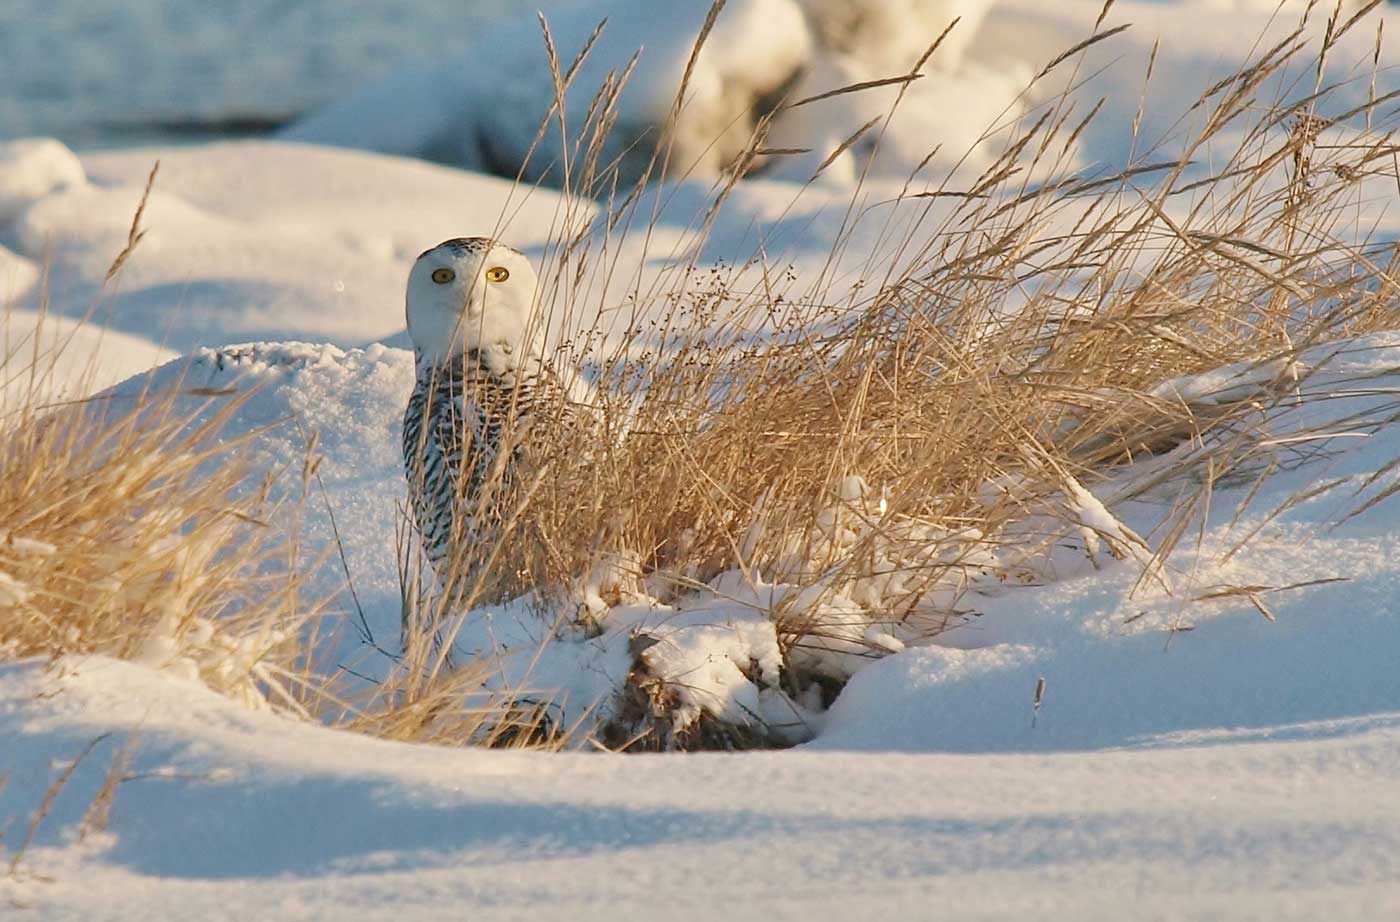 Snowy Owl sitting behind grass in snow